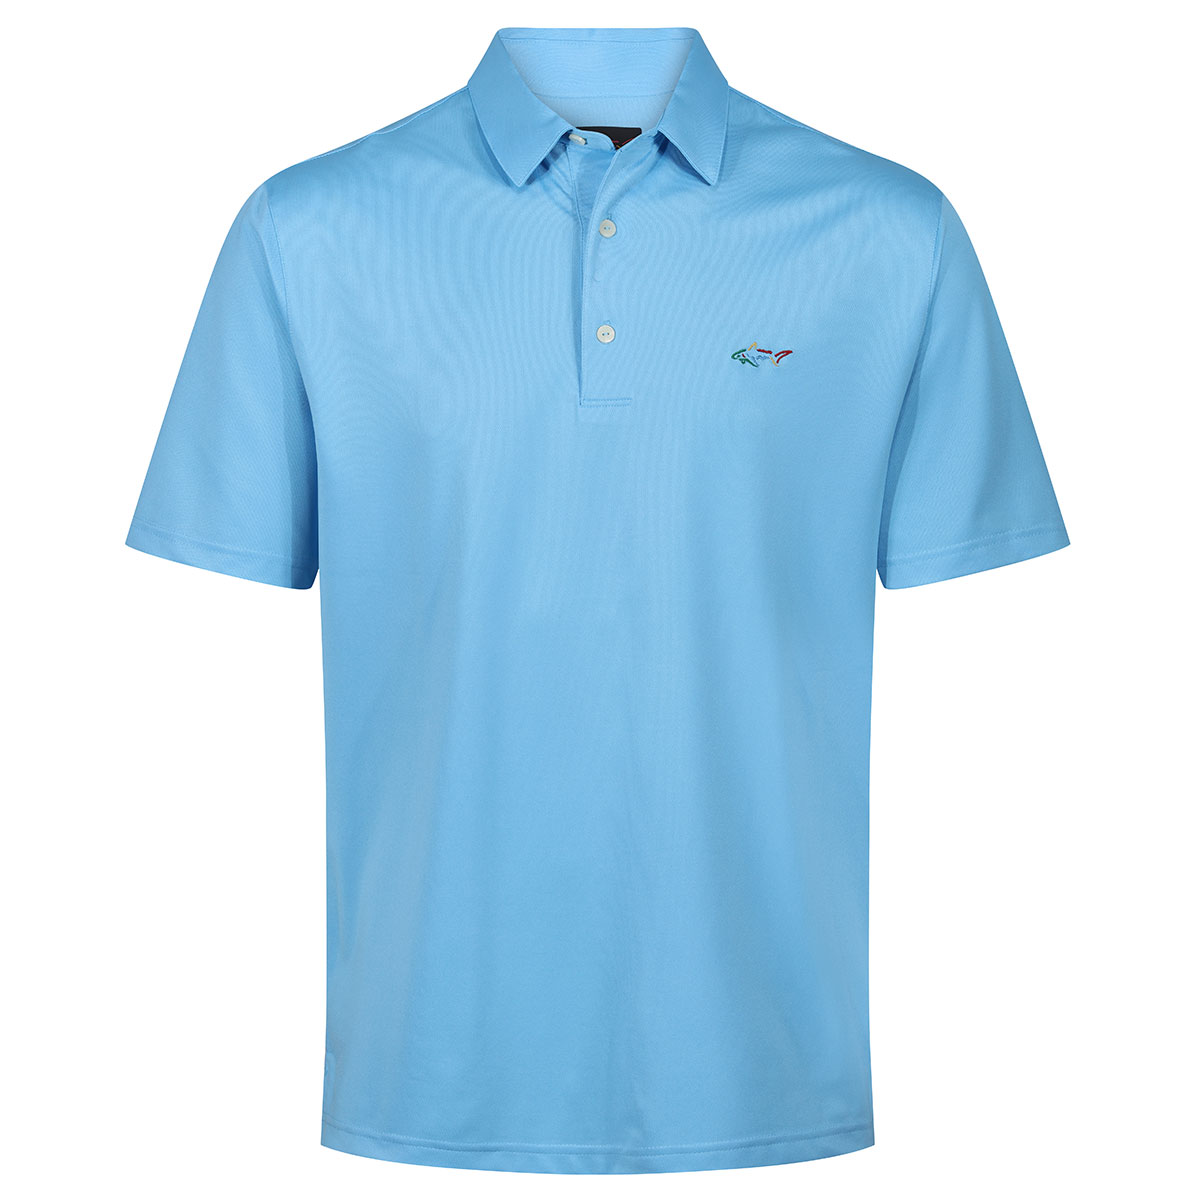 Greg Norman Men's Shark Logo Golf Polo Shirt from american golf